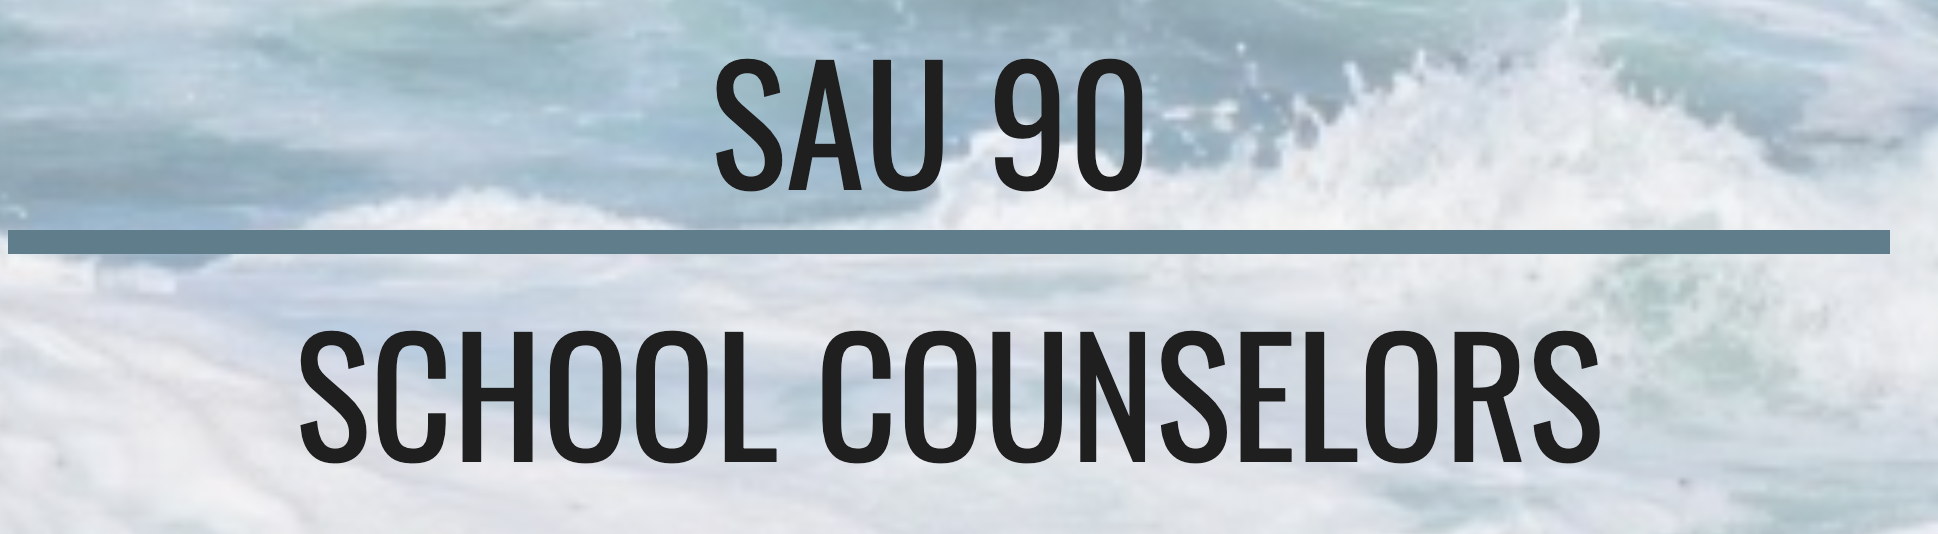 SAU 90 School Counselors